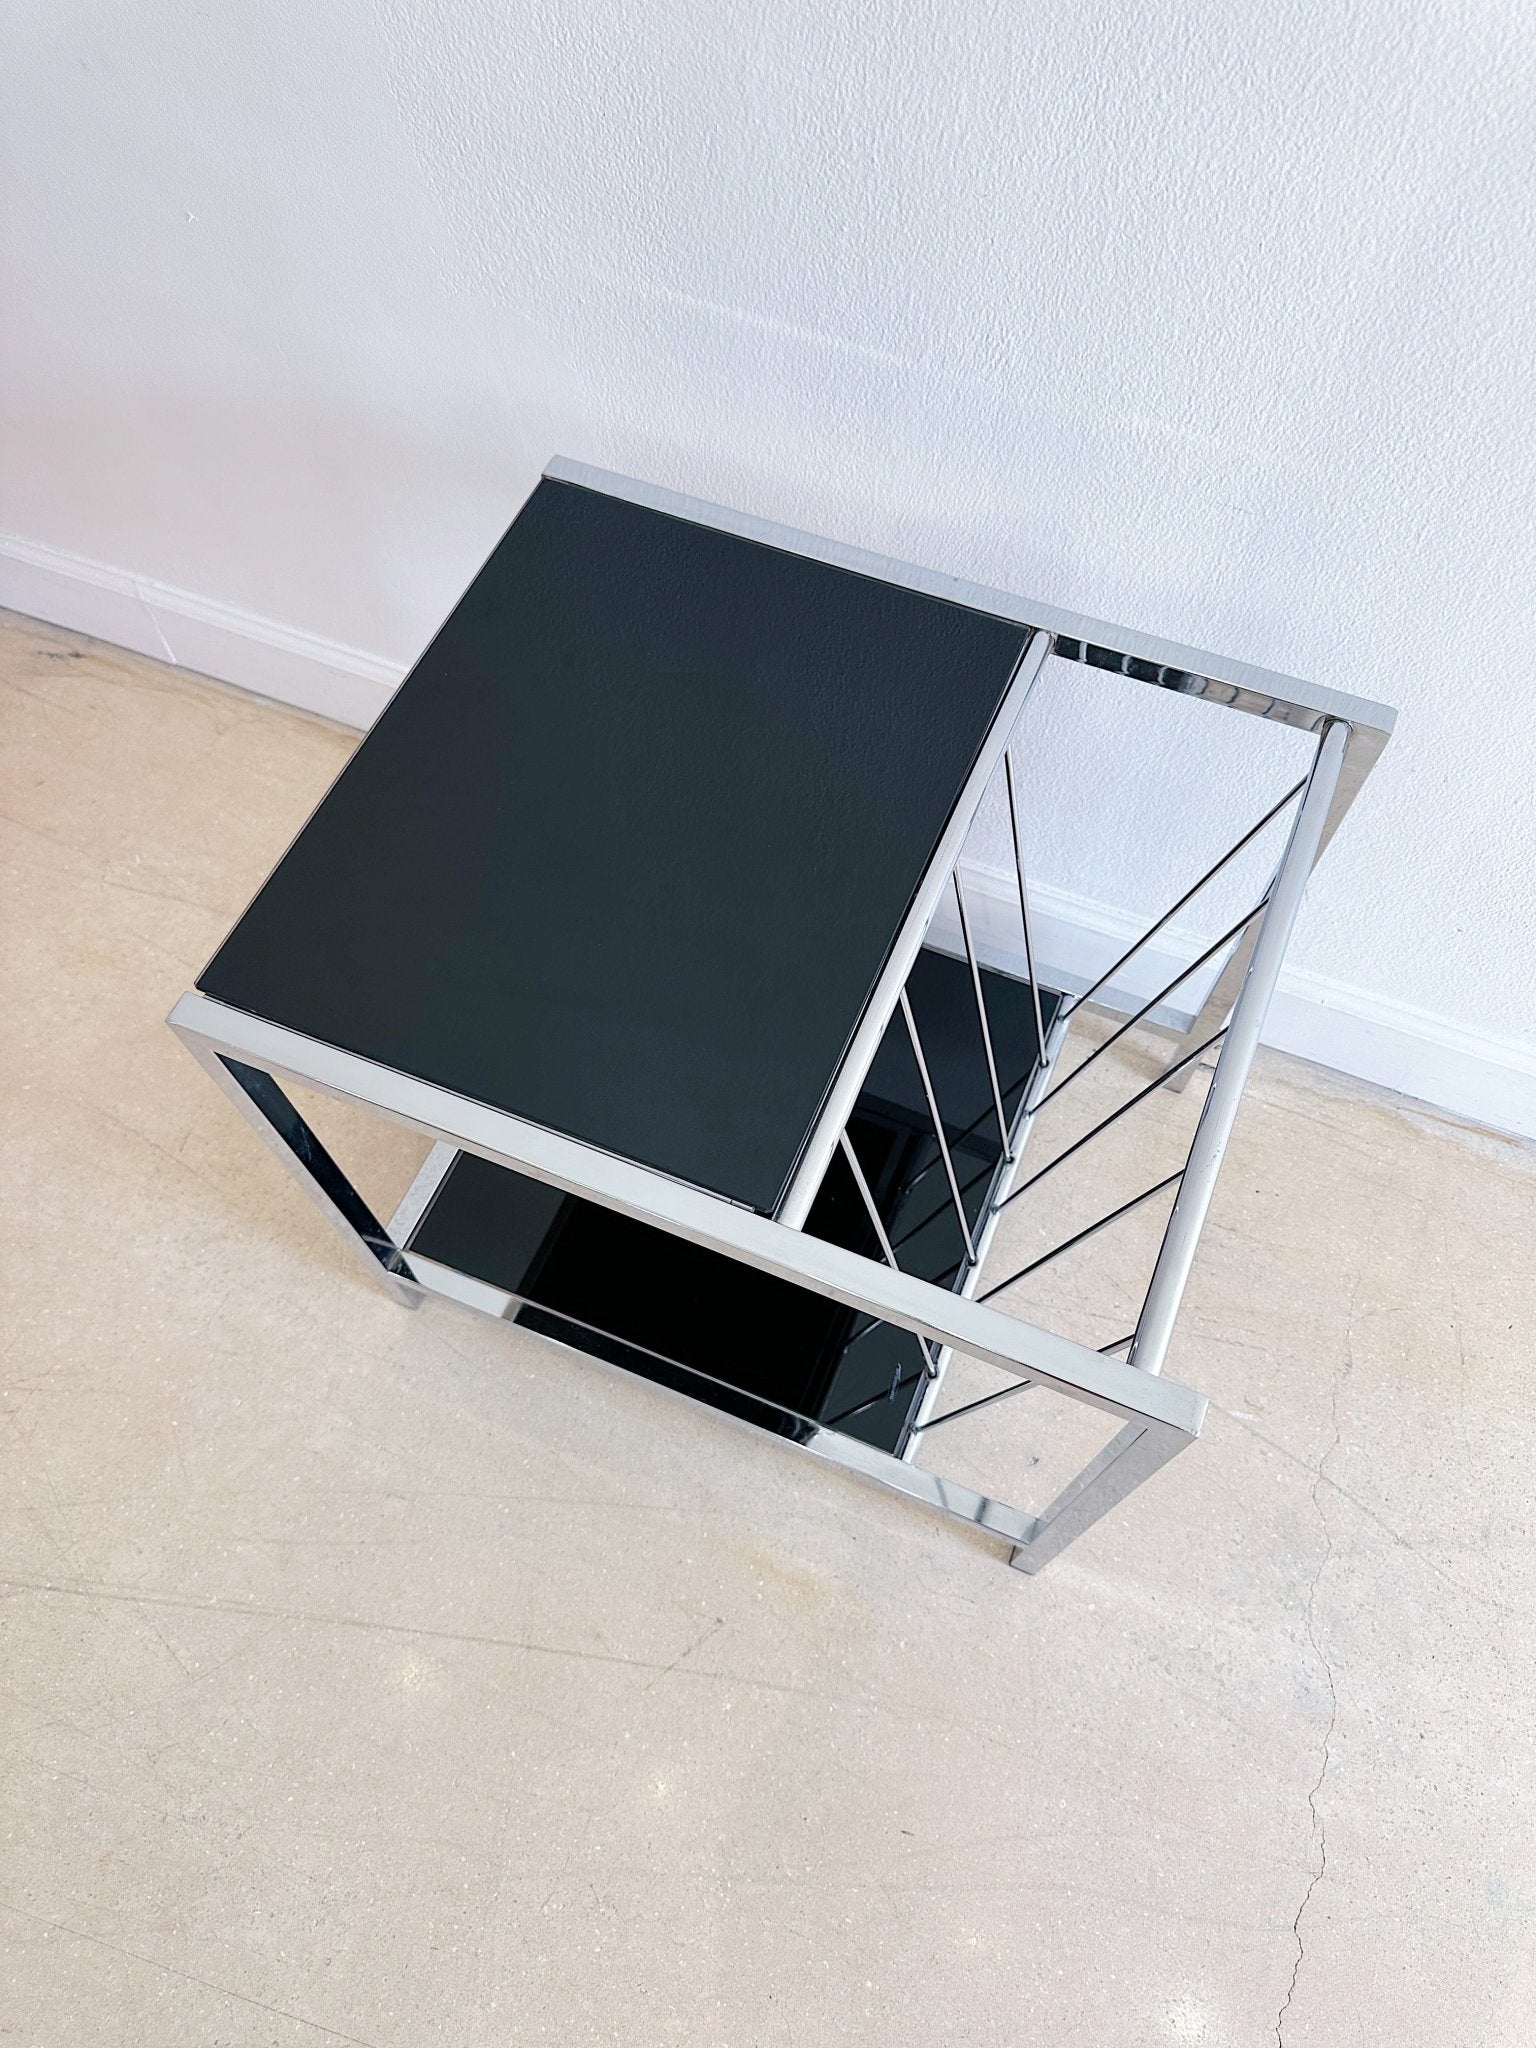 MCM Black Glass & Chrome Magazine Table - Rehaus